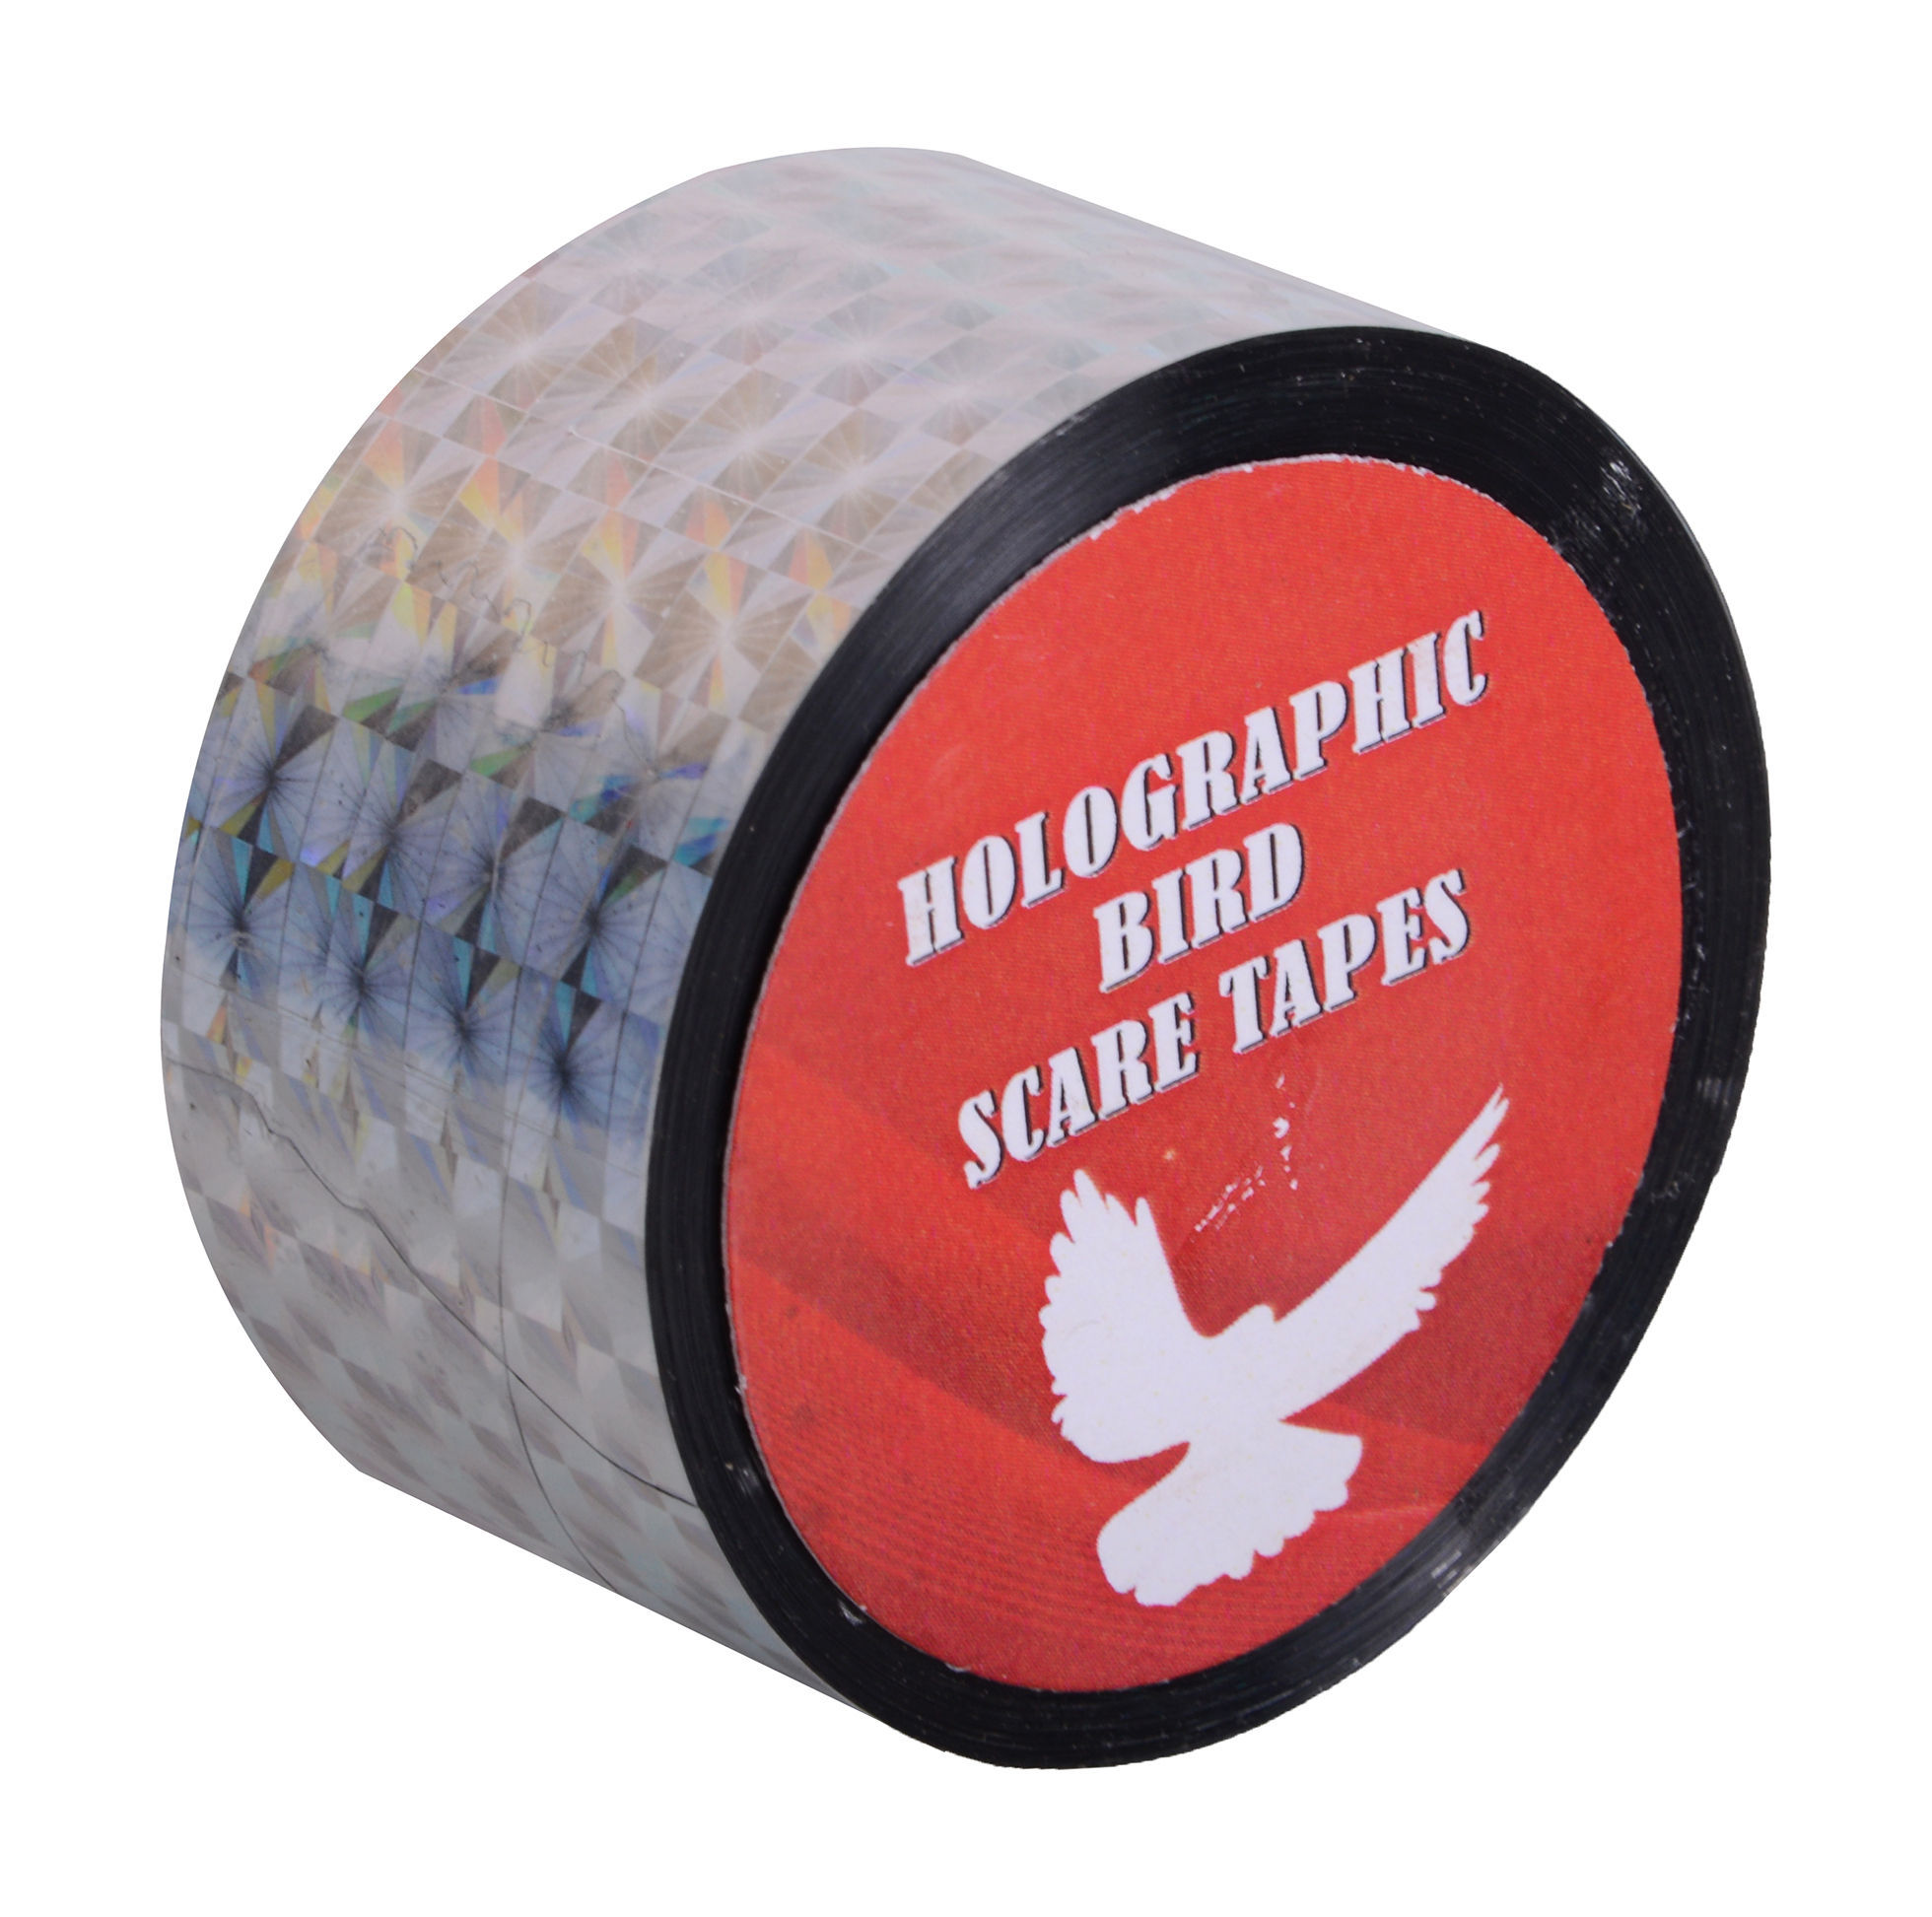 Holographic pigeon  Bird Scarer tape